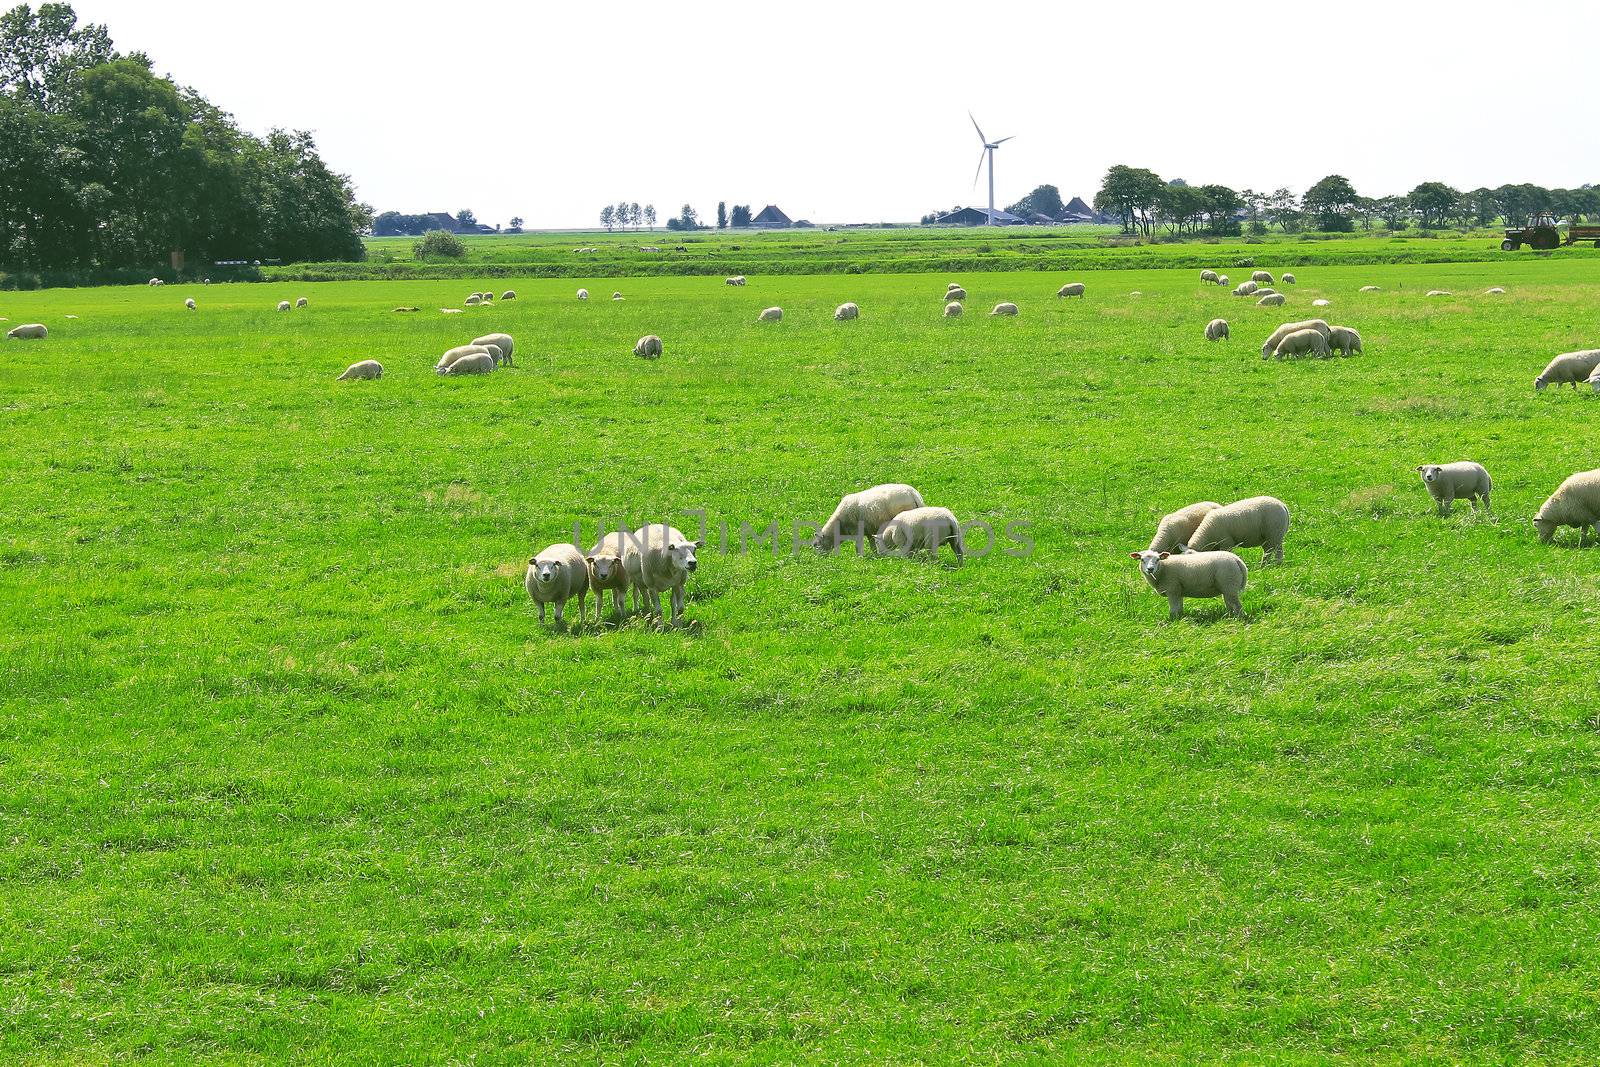 Sheep graze in a meadow near the Dutch farm by NickNick